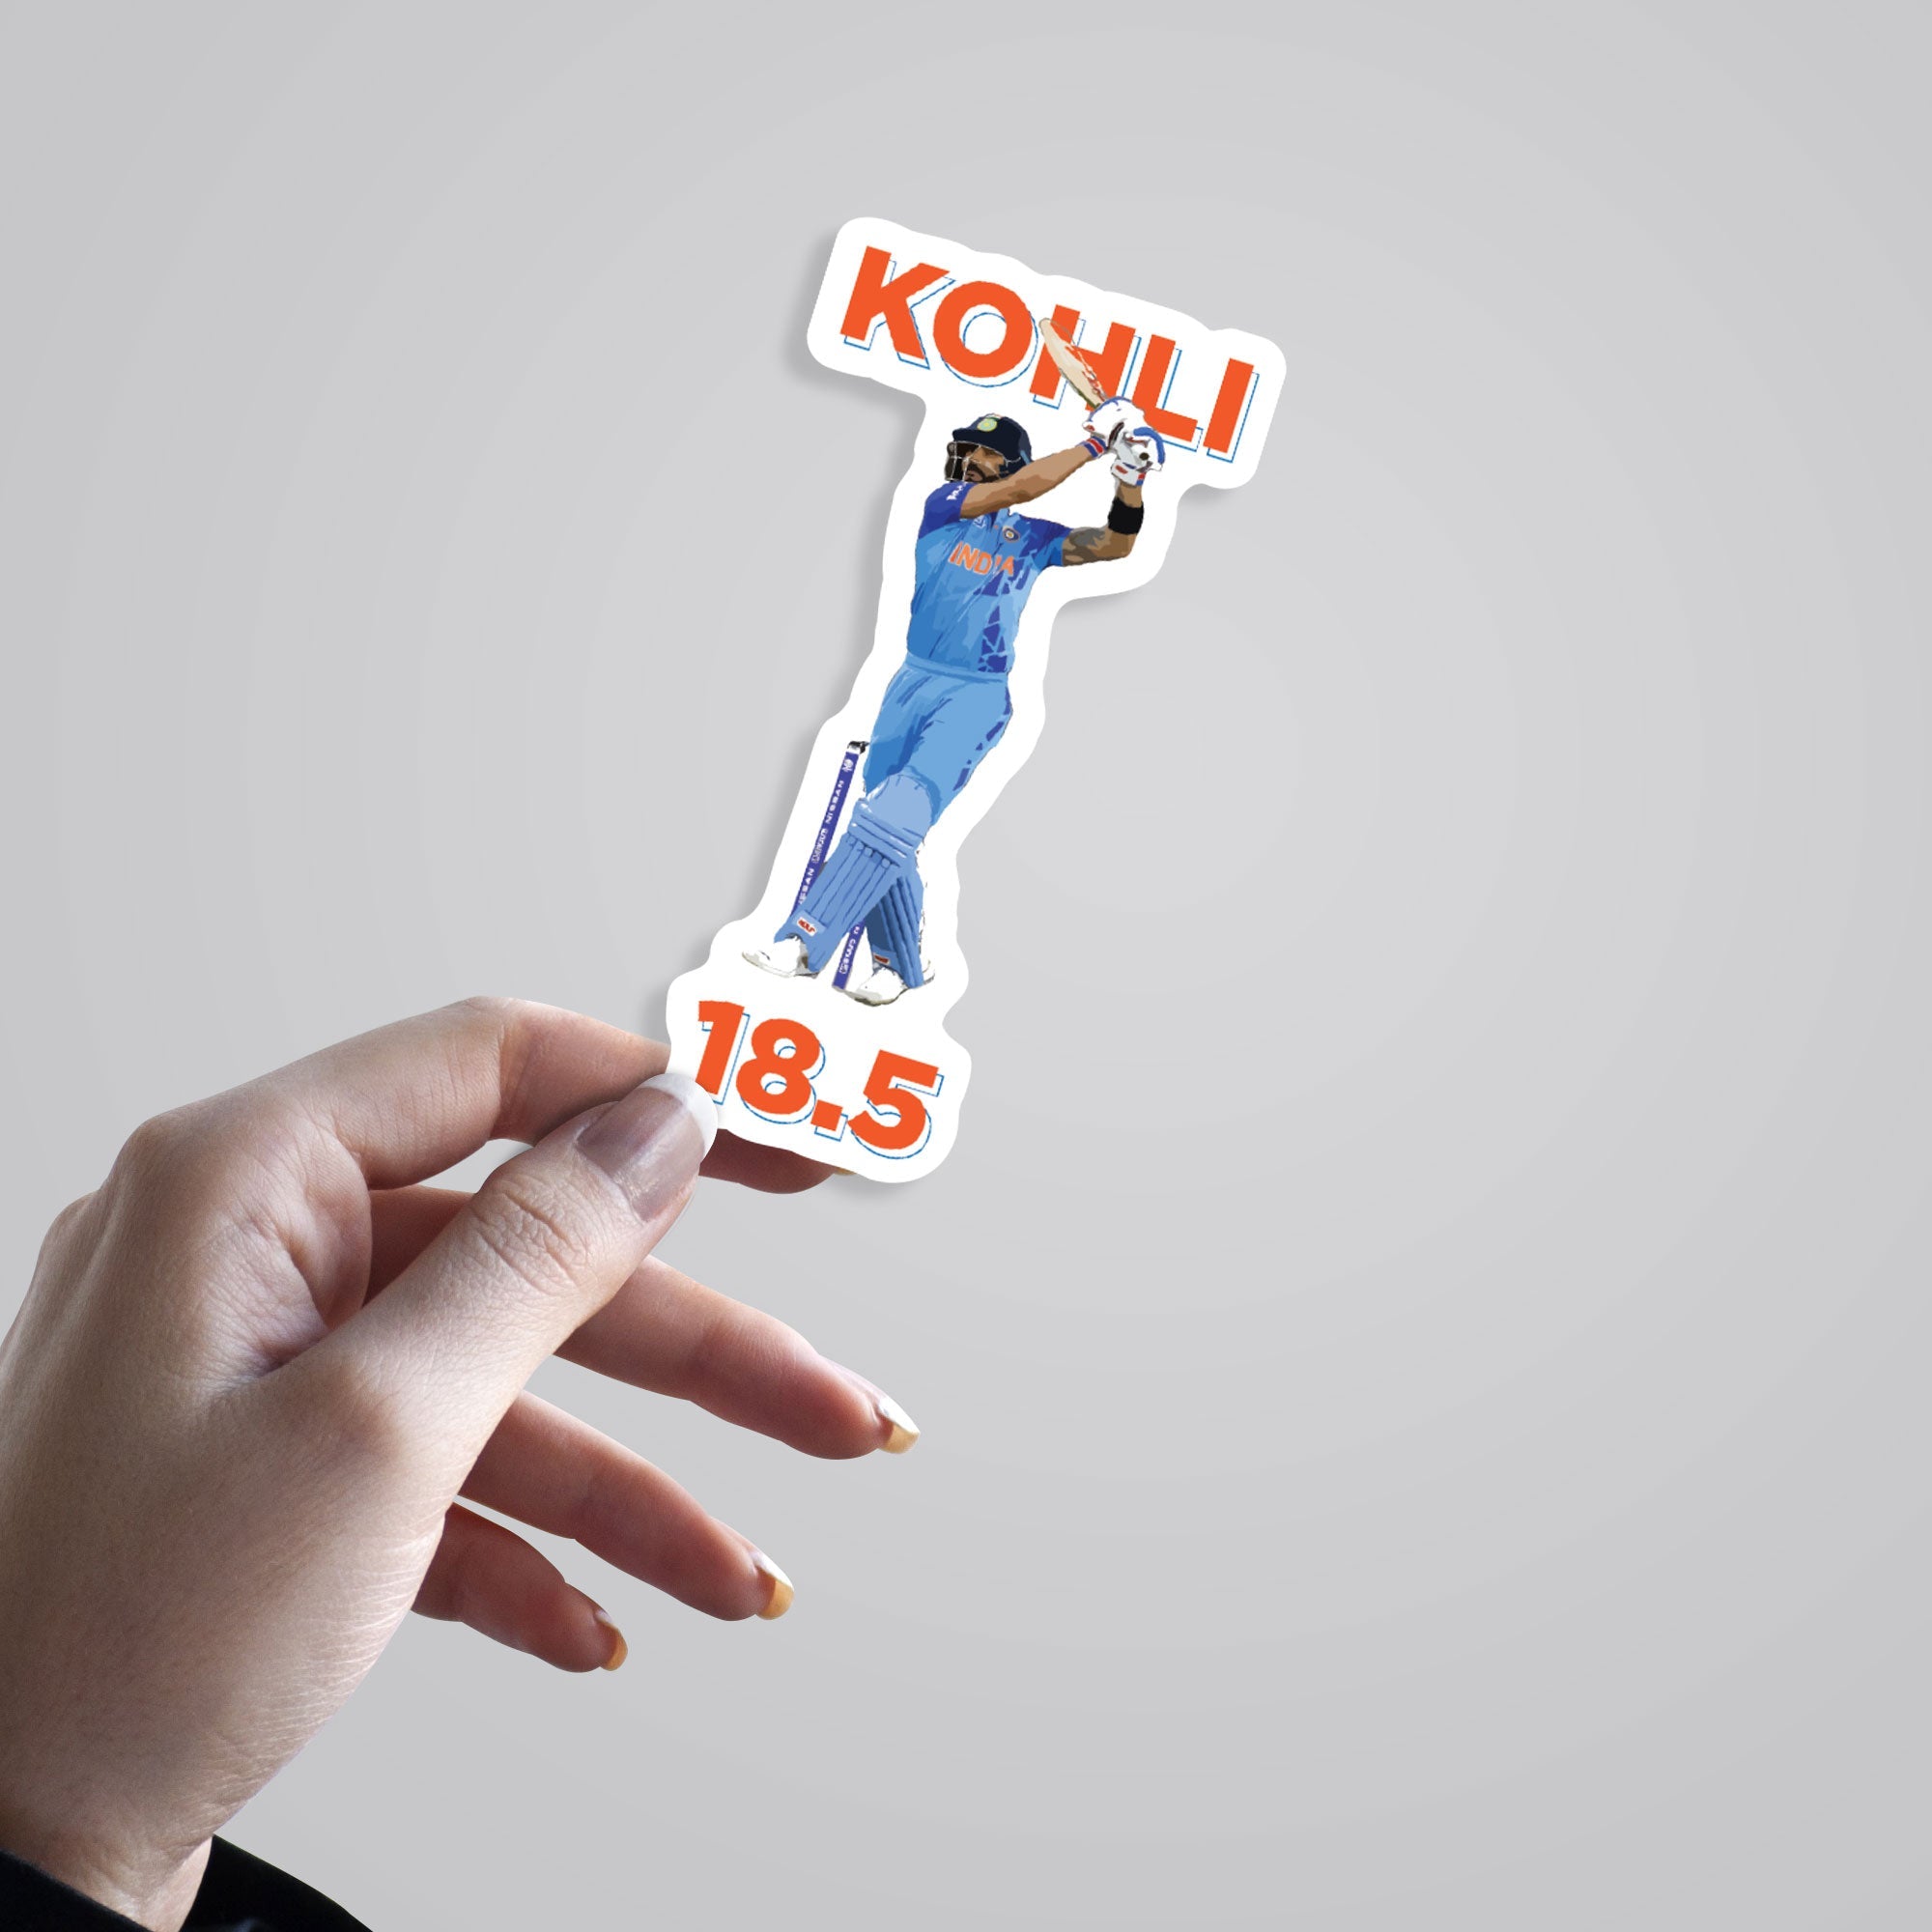 Kohli 18.5 Sports Stickers